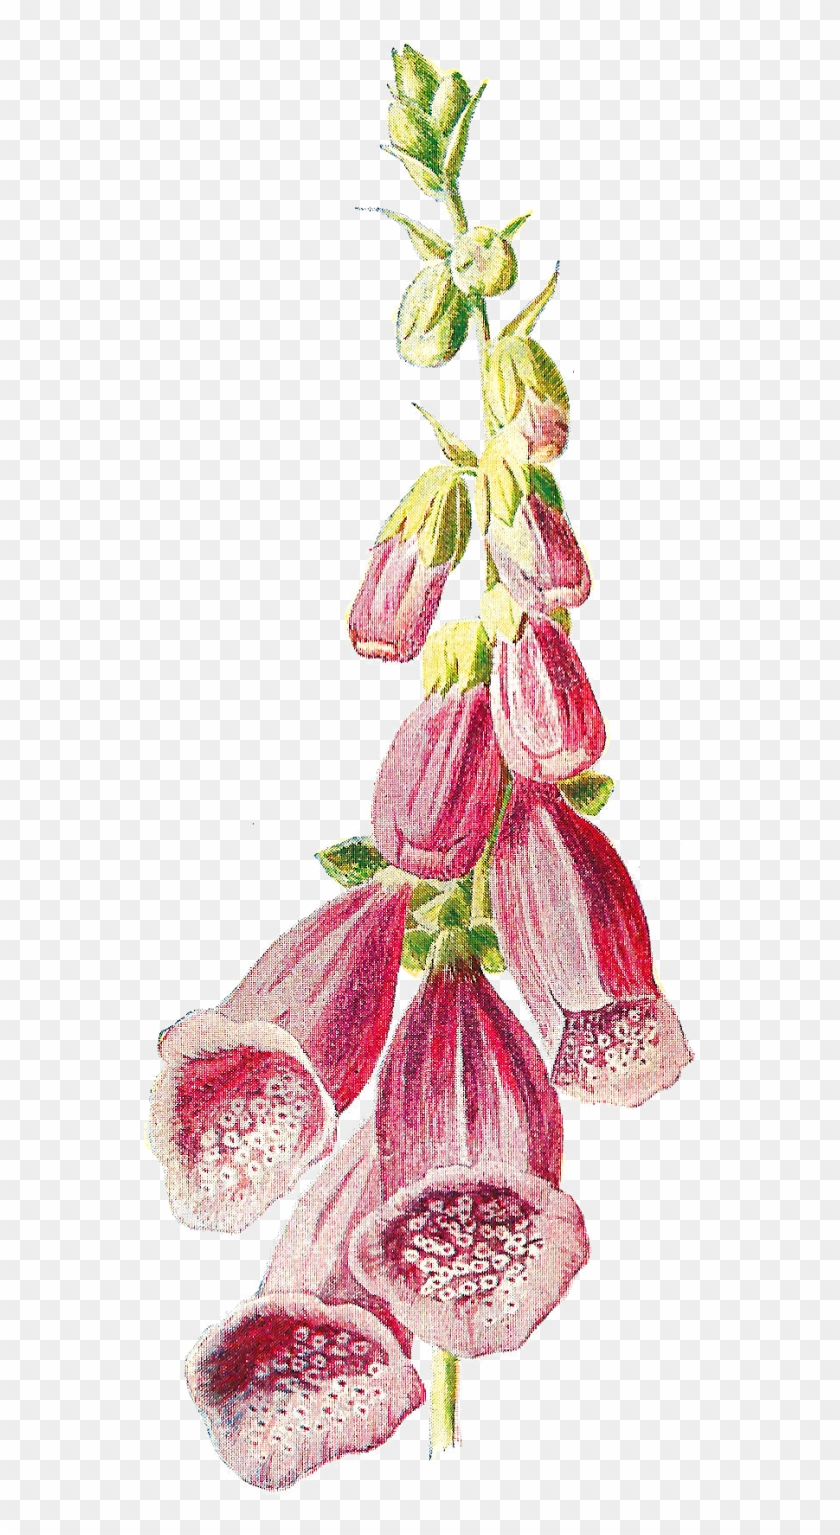 Digital Wildflower Image - Foxglove Botanical Illustration #658118